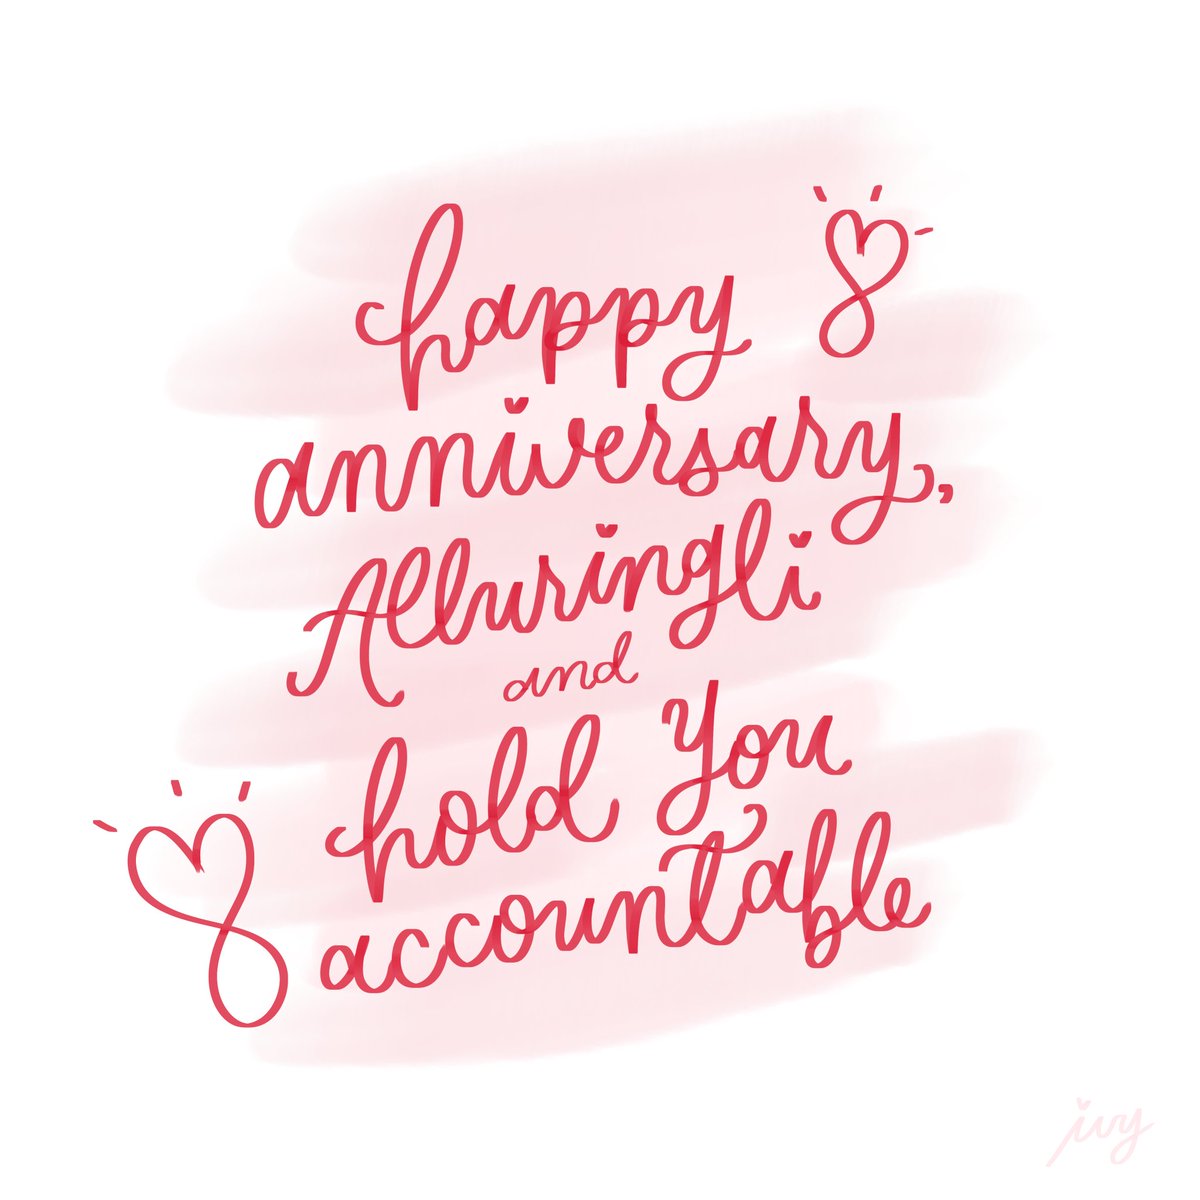 happy anniversary, ate li and hold you accountable! salamat sa pagsusulat. ♥️ habol minutes before this day ends 😭